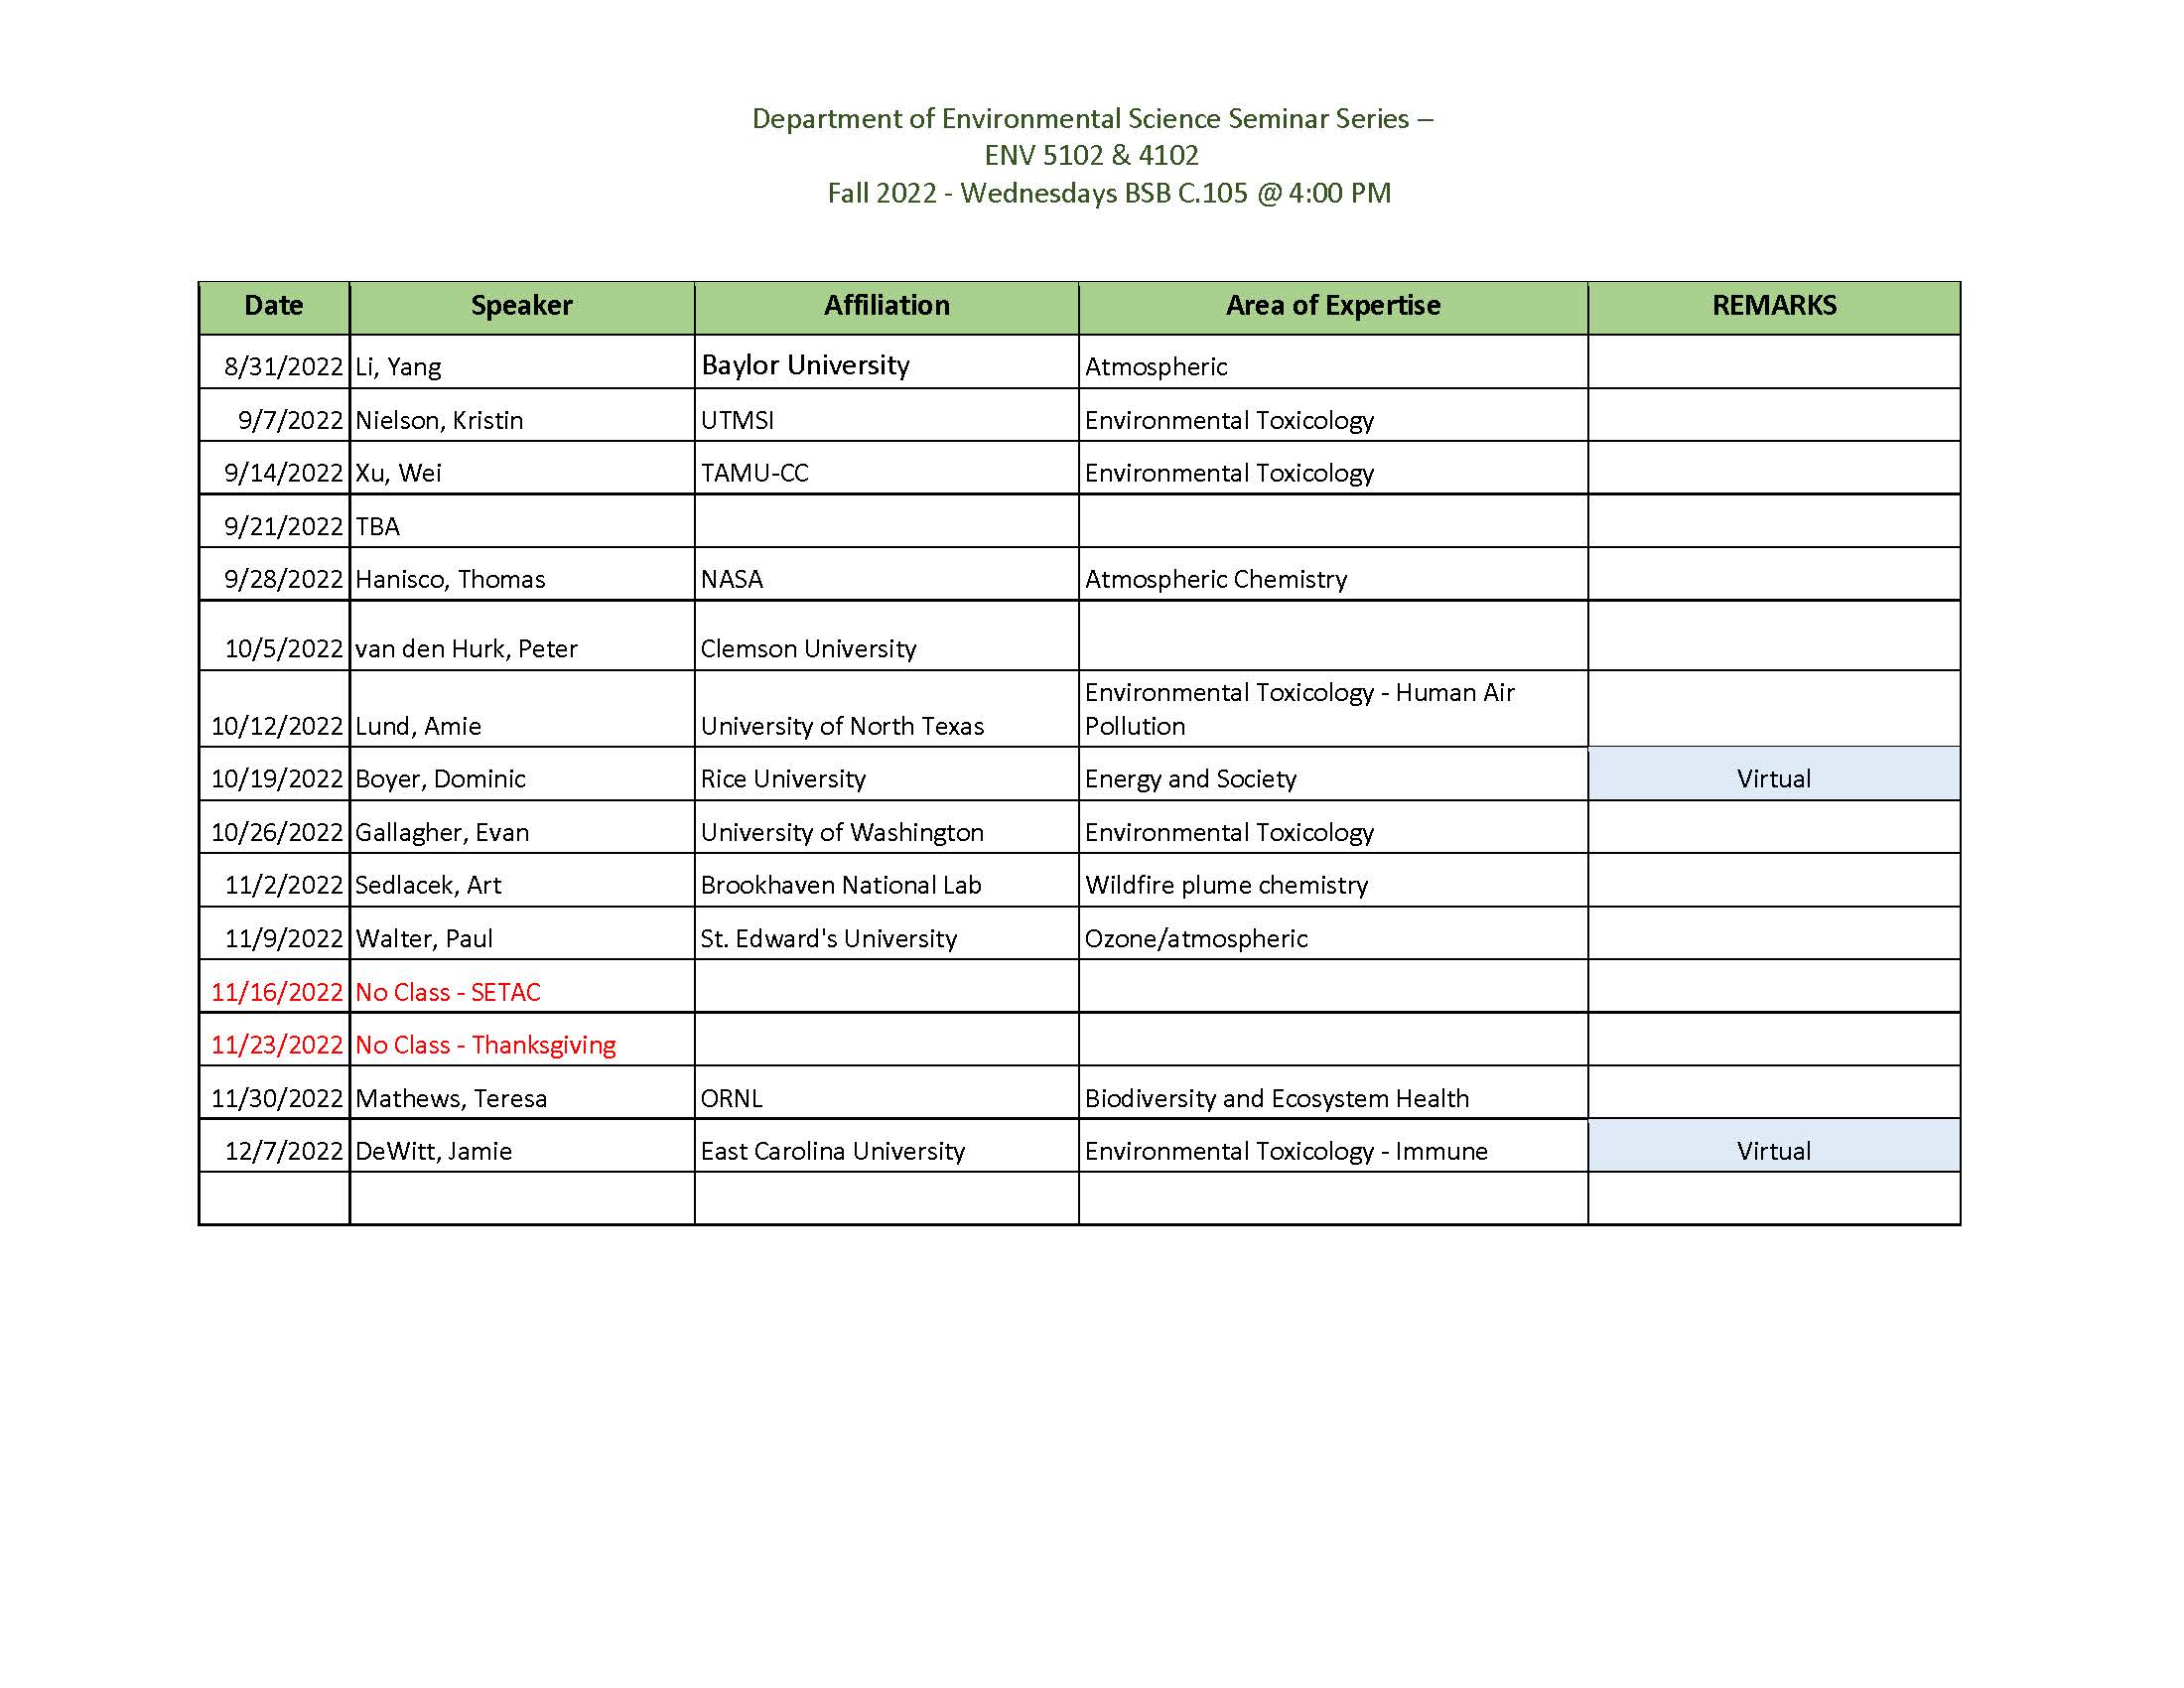 ENV Seminar Series Schedule - Fall 2022